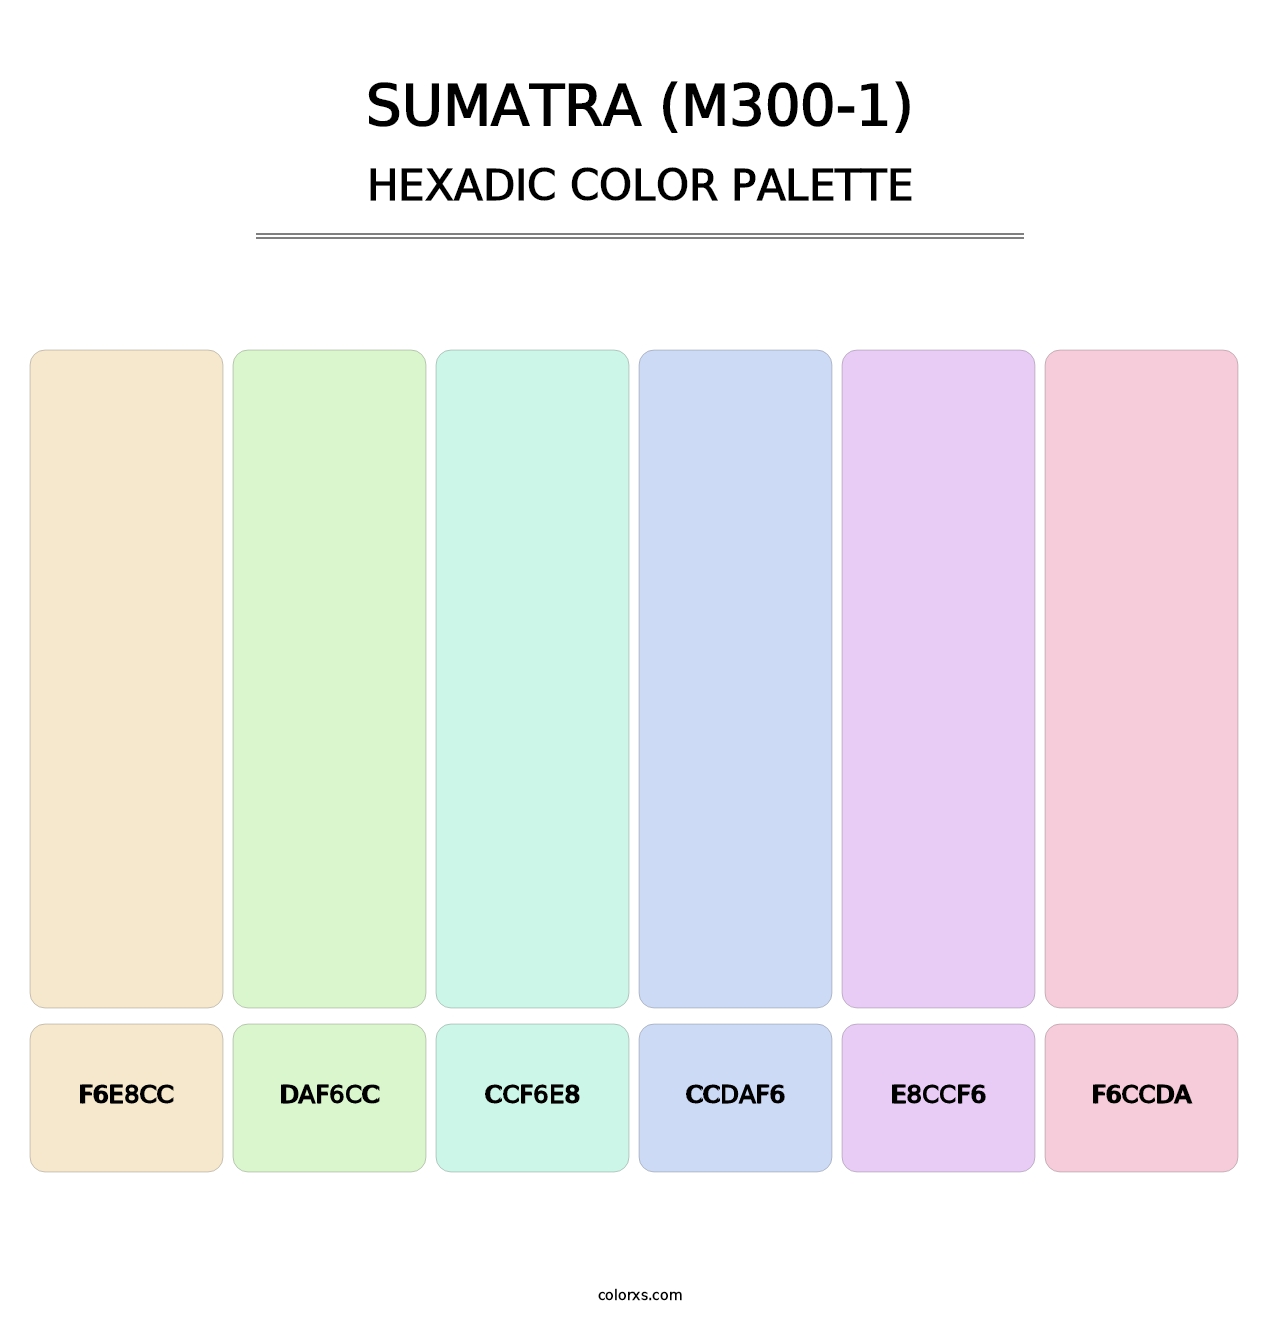 Sumatra (M300-1) - Hexadic Color Palette